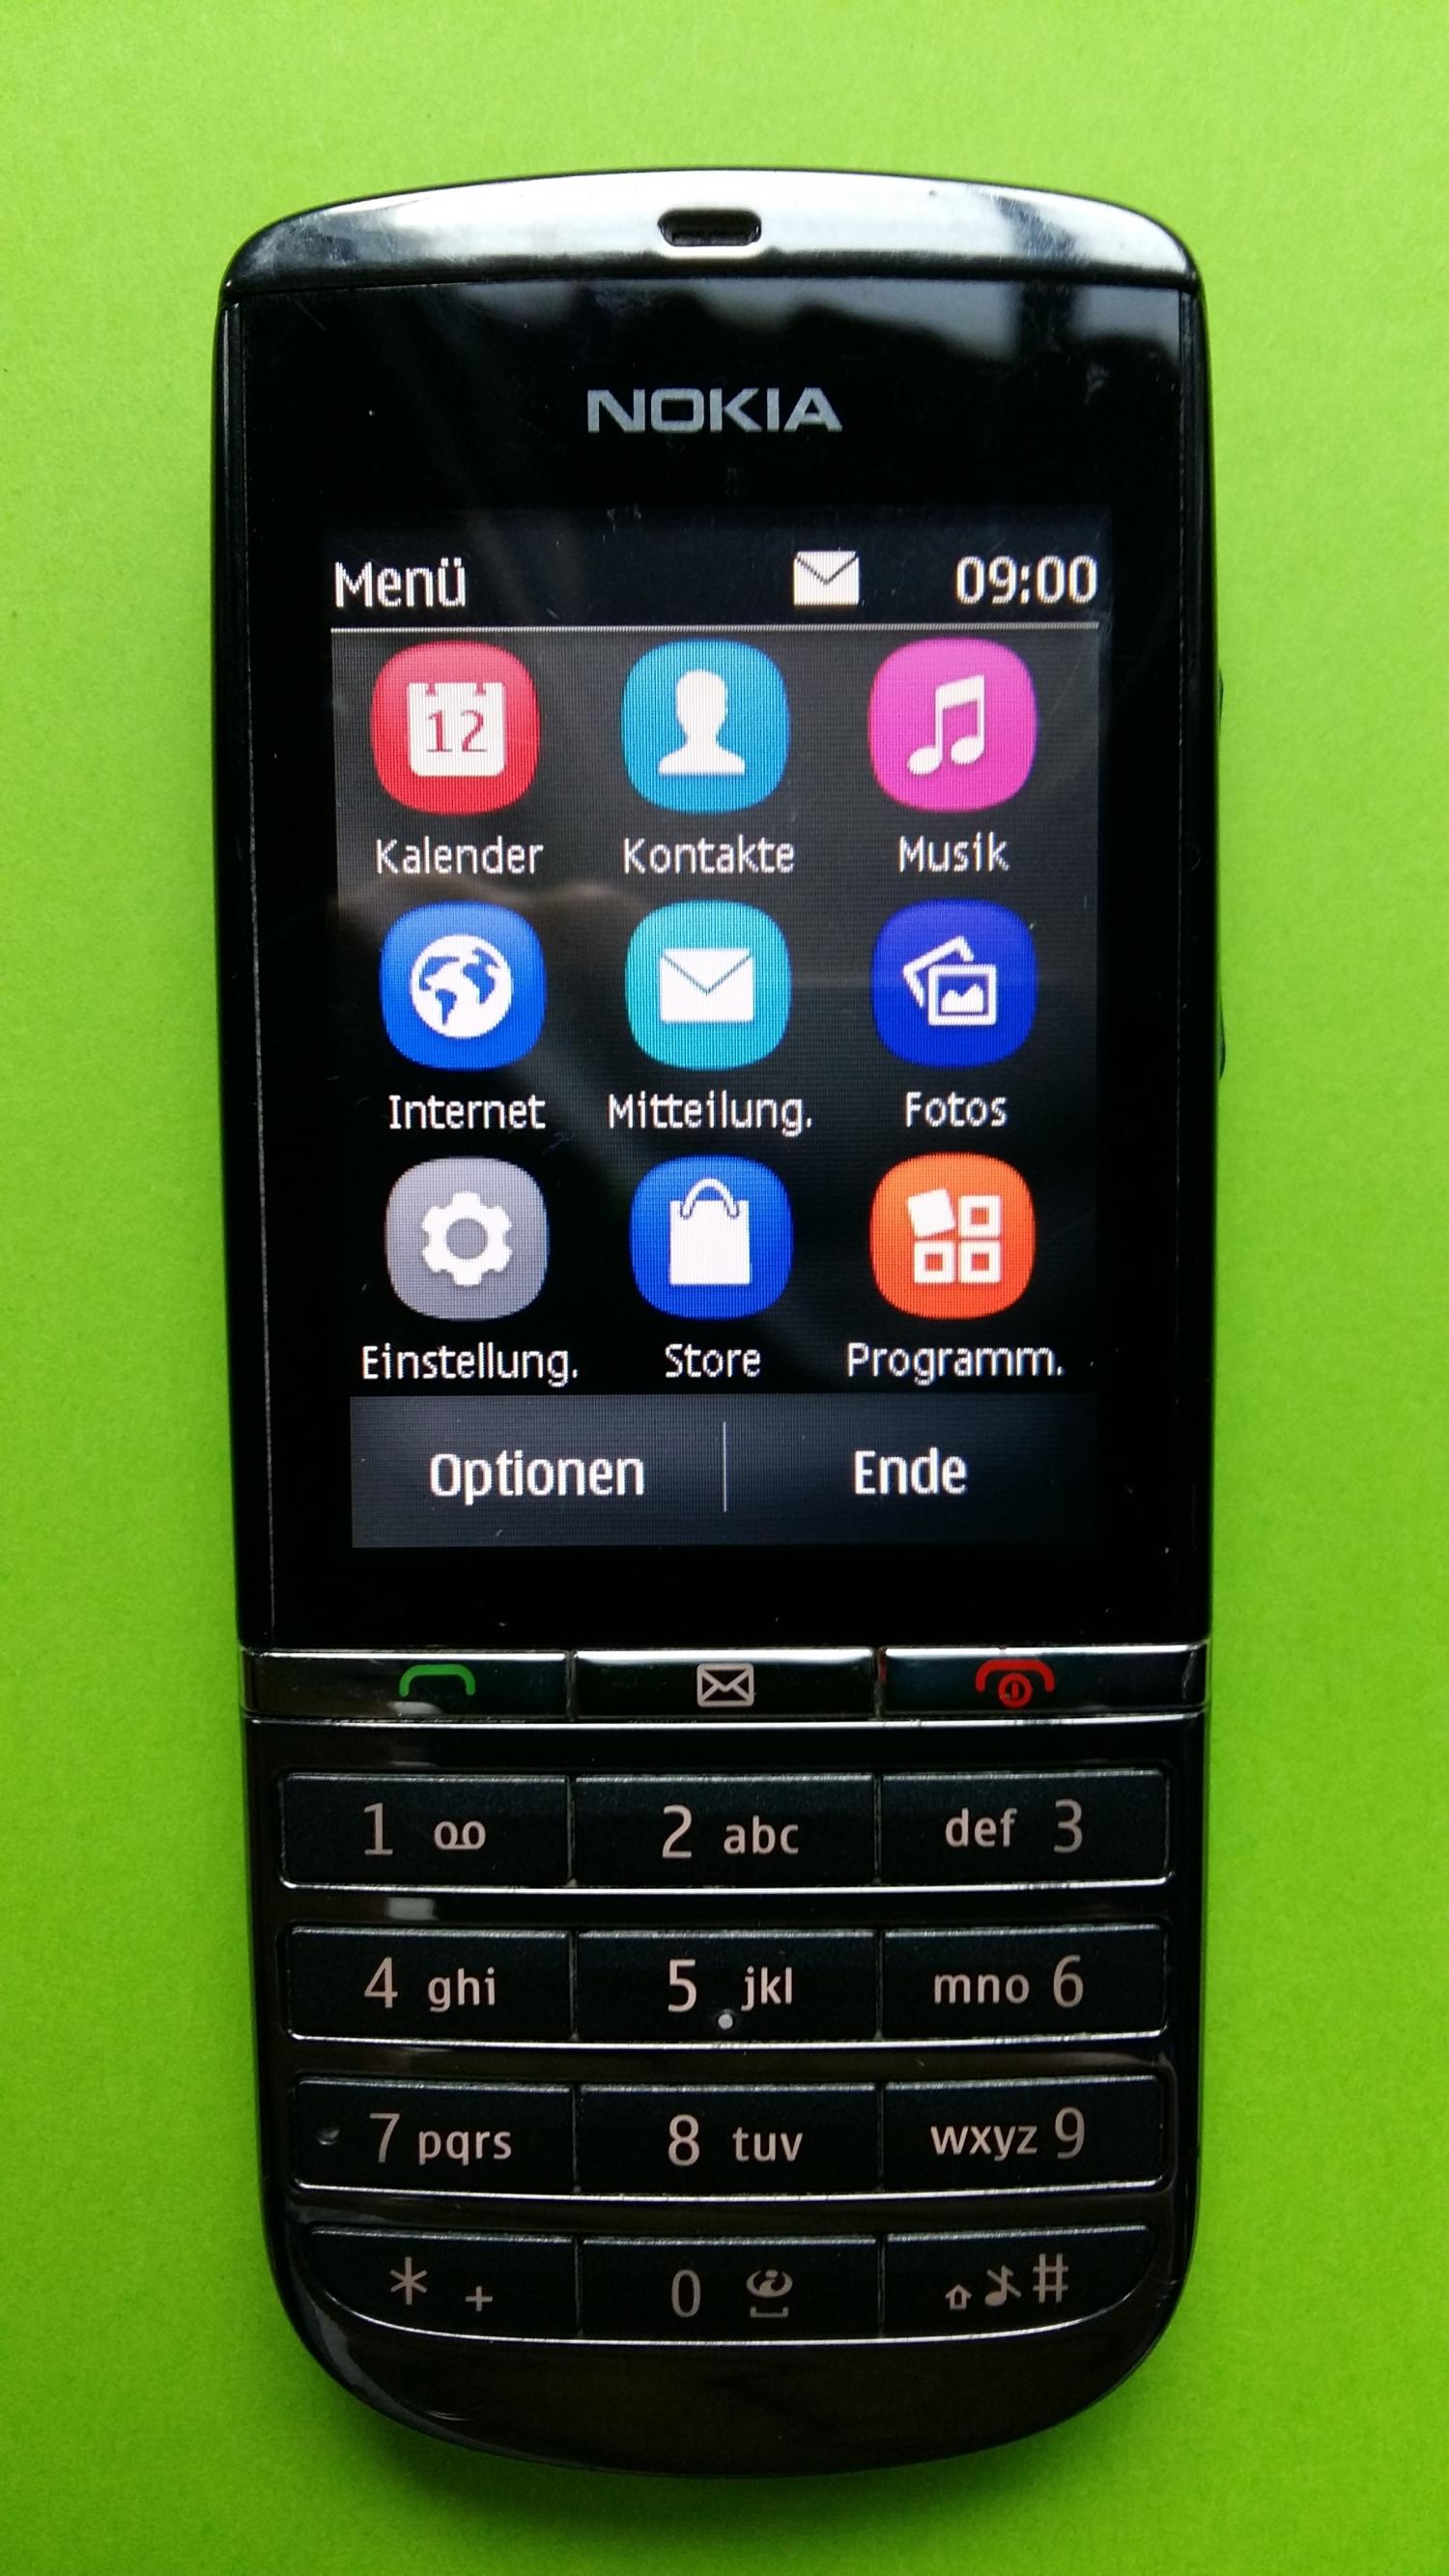 image-7300145-Nokia 300 Asha (1)1.jpg